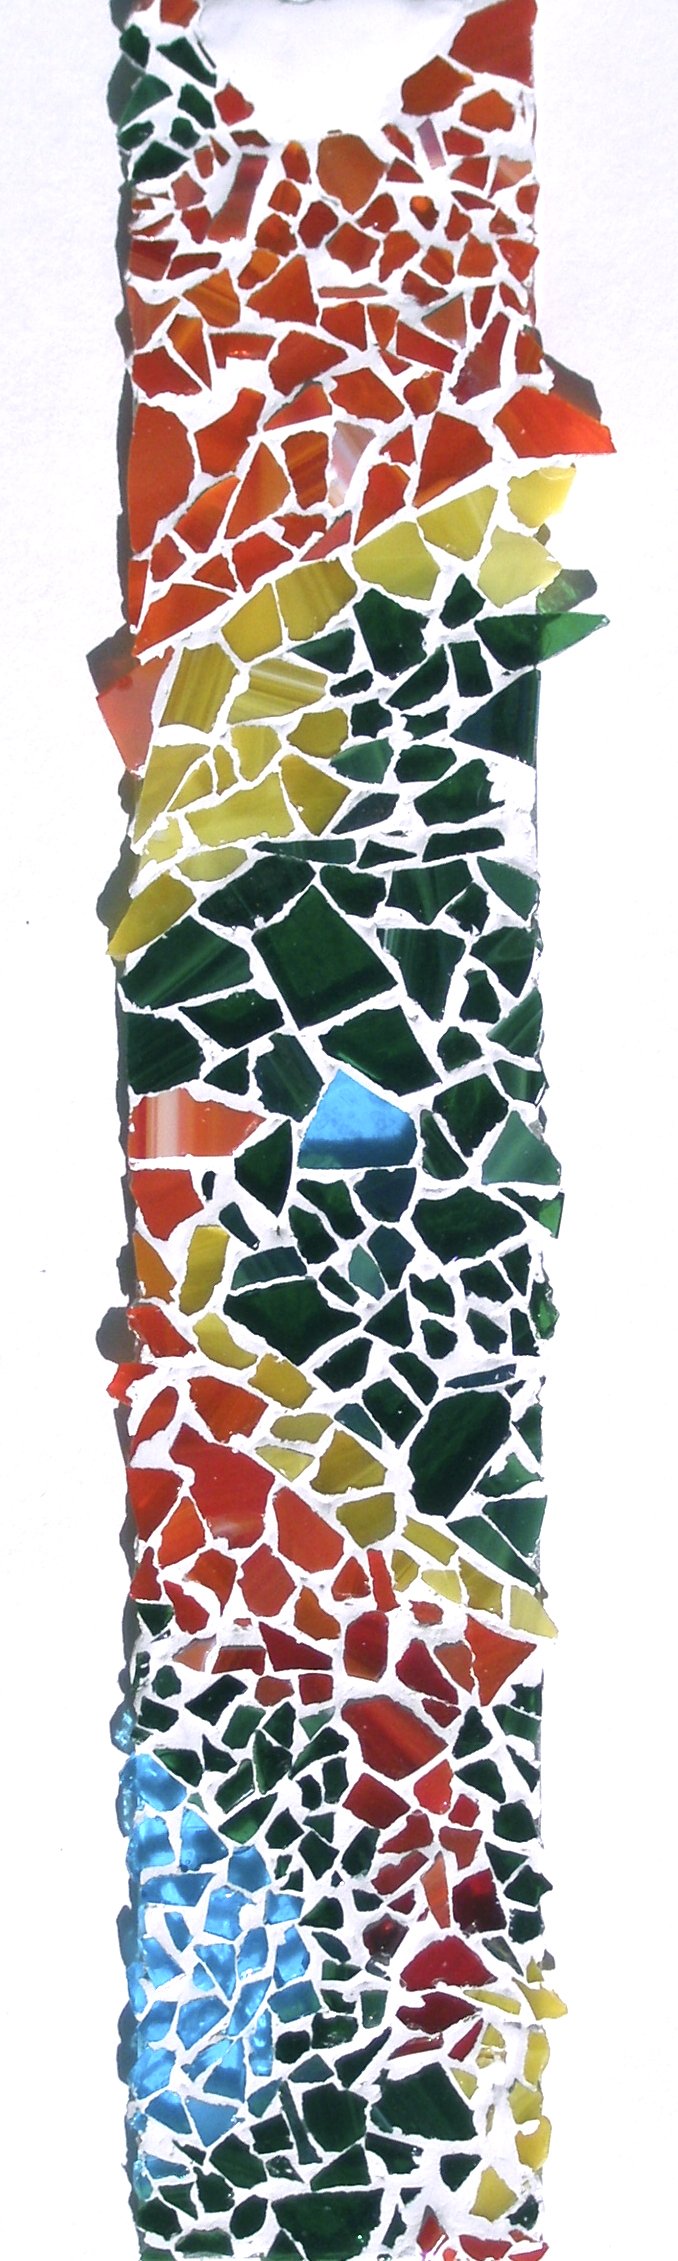   Light Catcher 2  glass mosaic on glass. 2010 